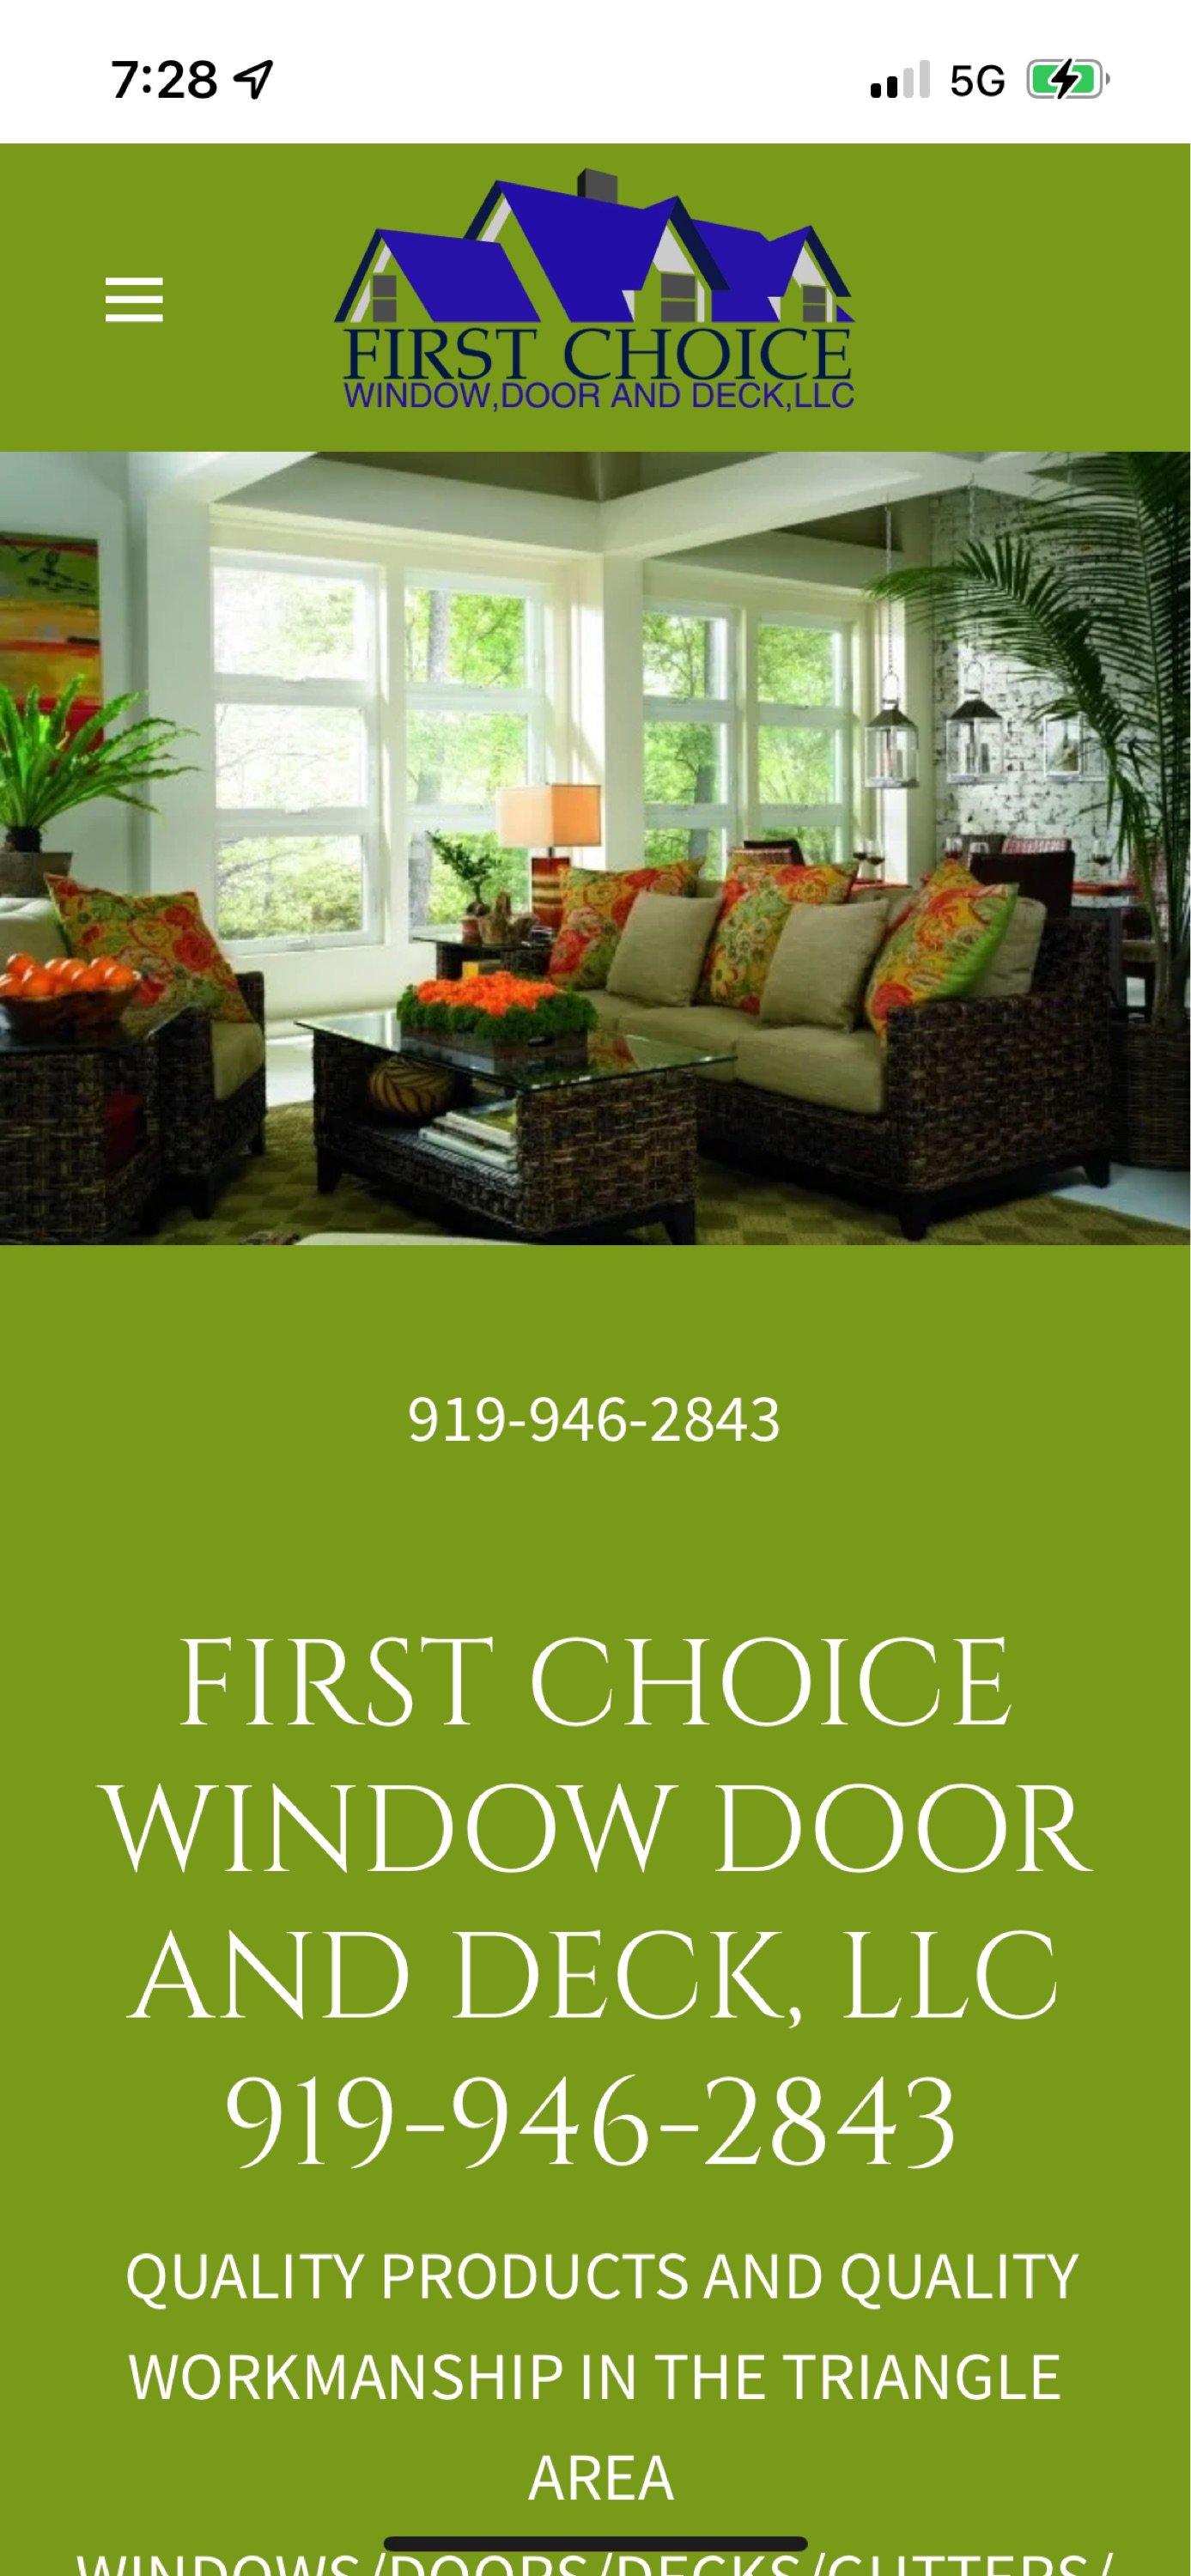 First Choice Window, Door, and Deck Logo